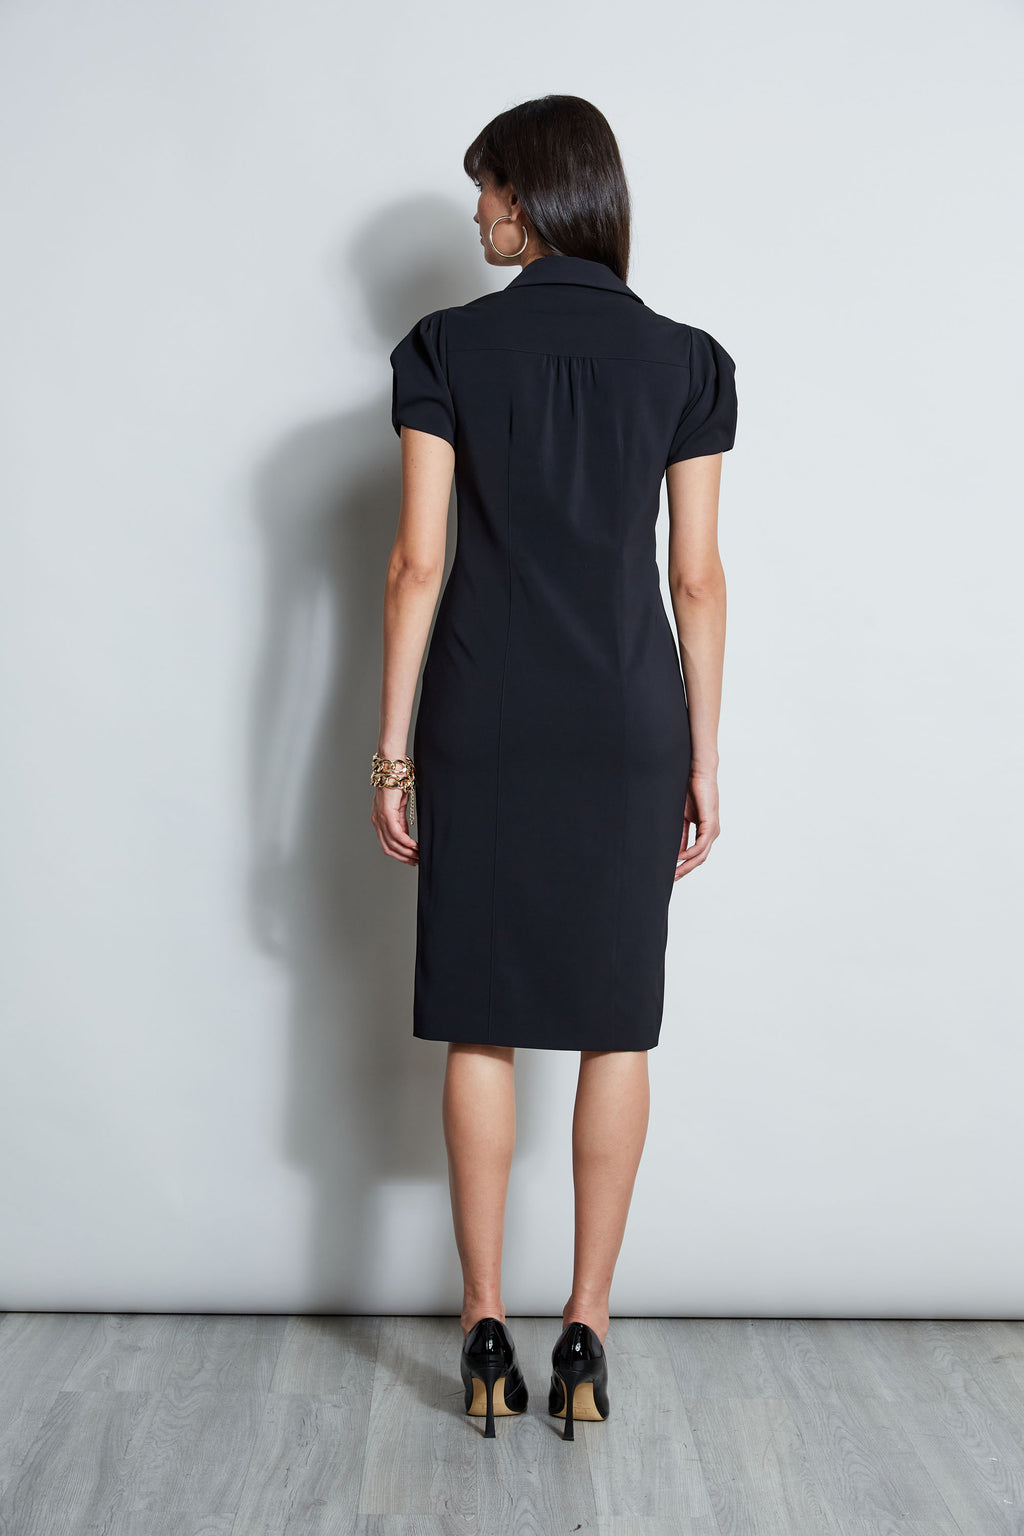 short sleeve black dress